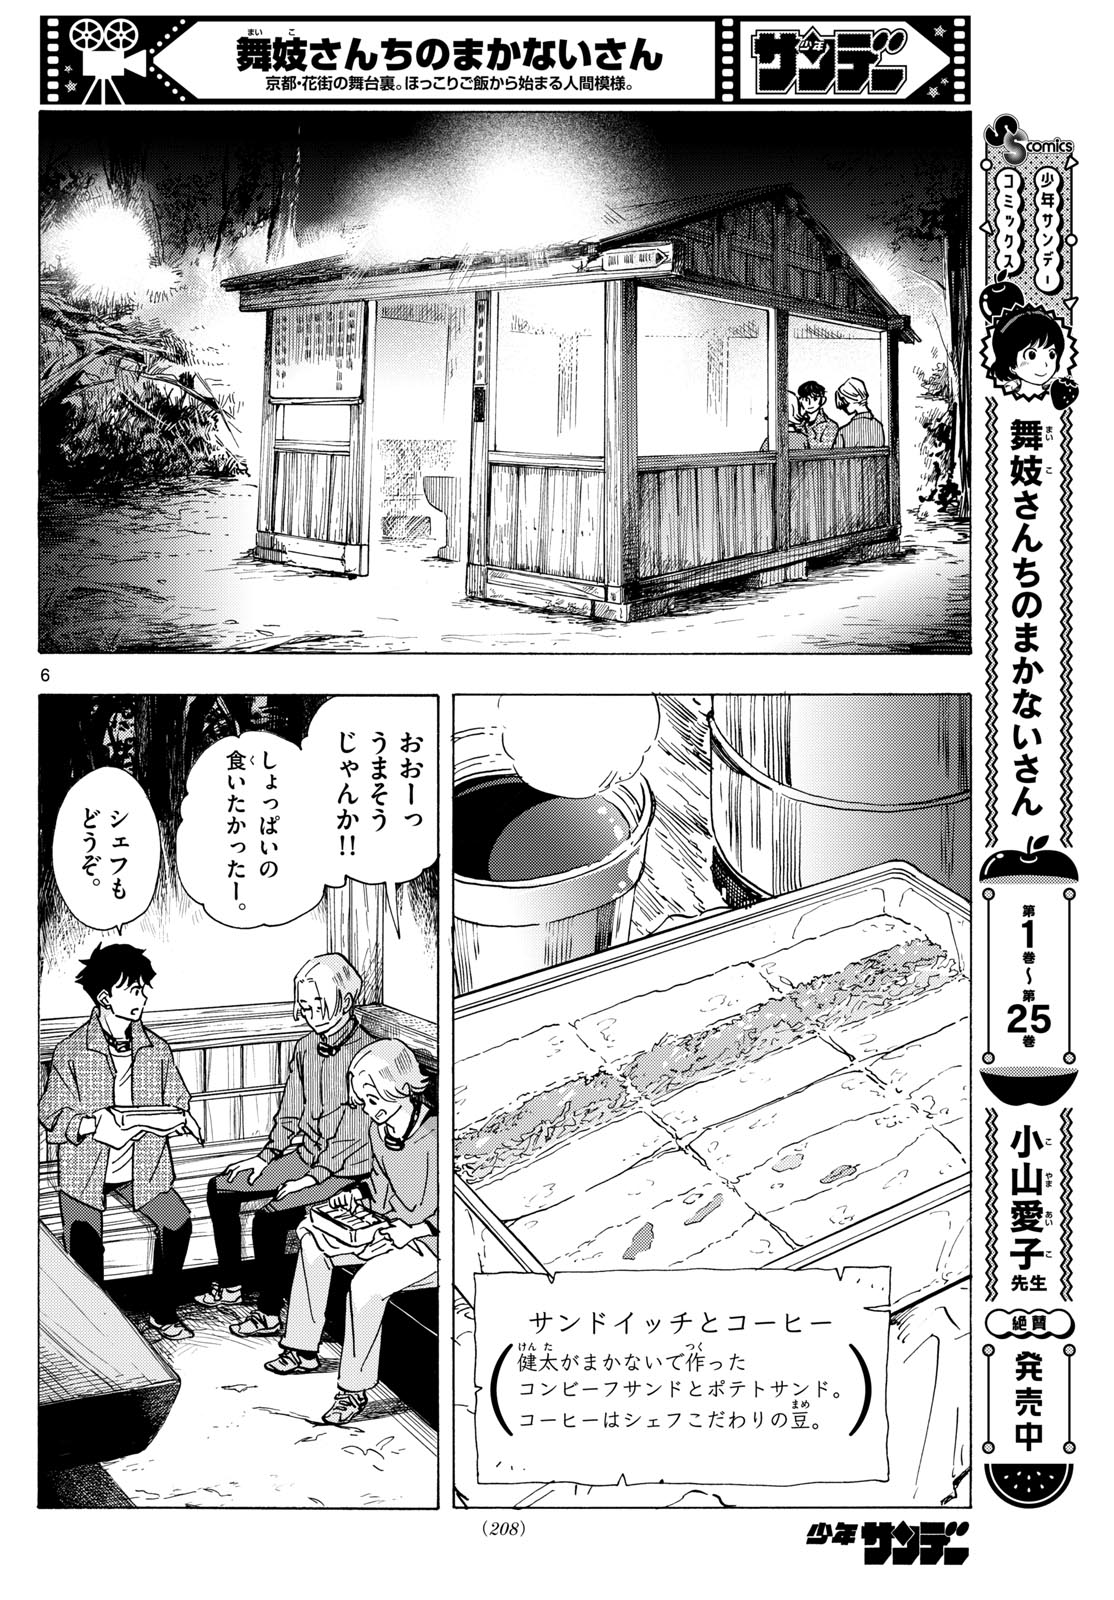 Maiko-san Chi no Makanai-san - Chapter 295 - Page 6